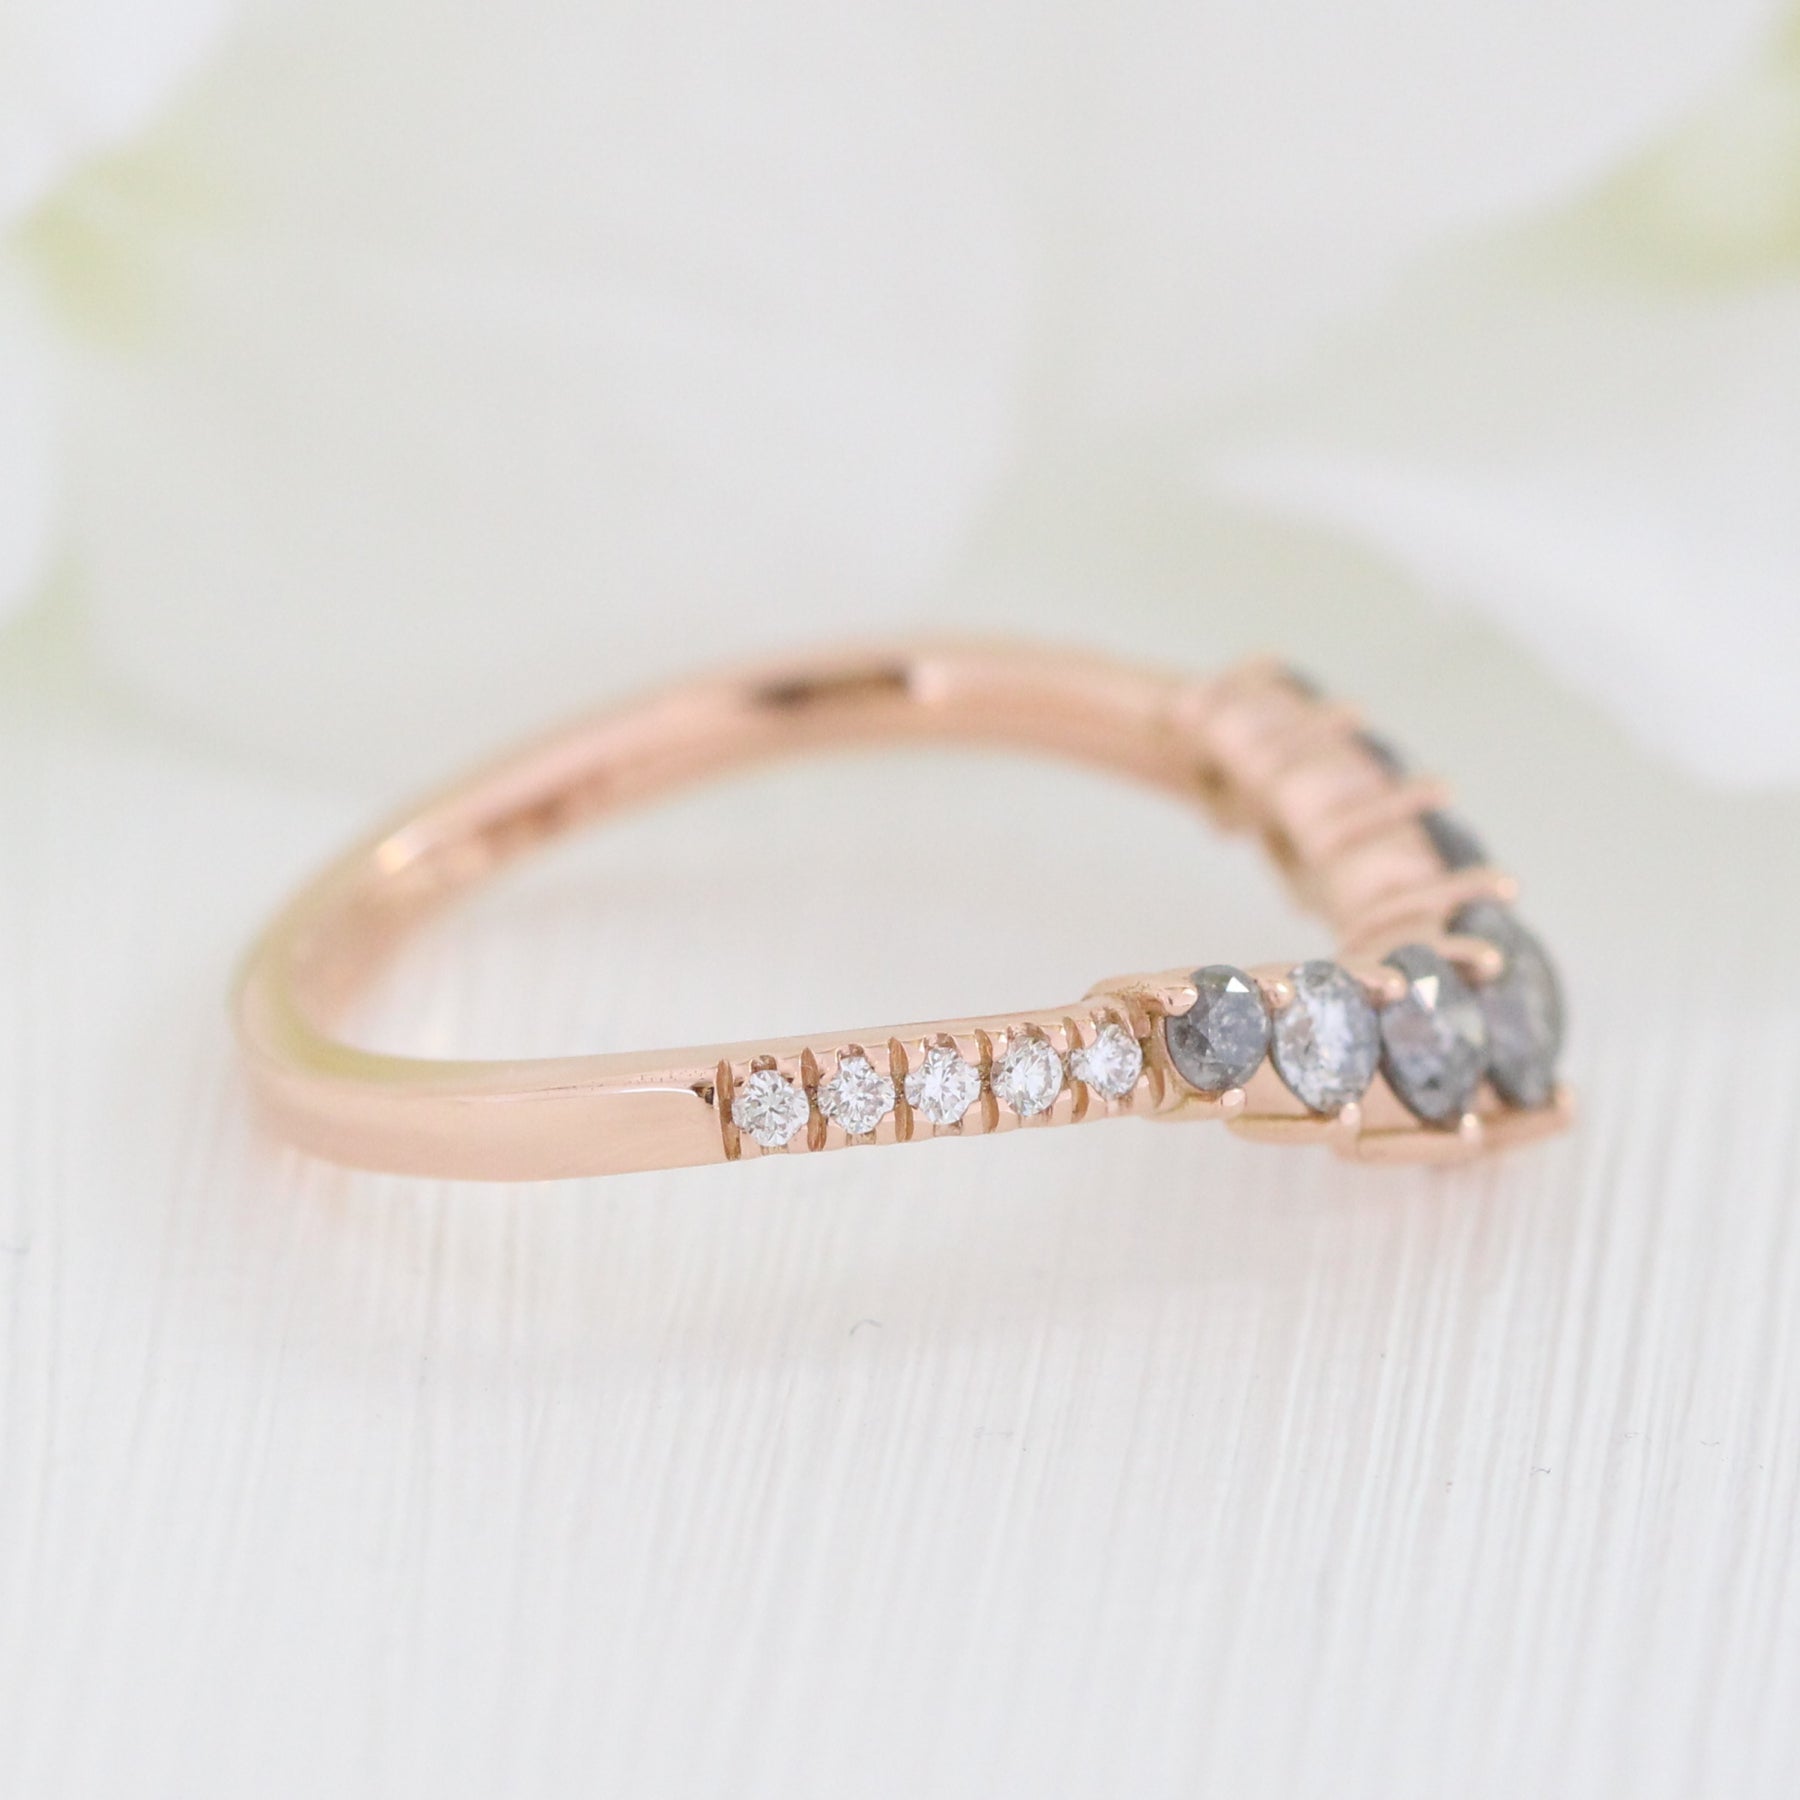 Large salt and pepper diamond wedding band rose gold grey diamond ring la more design jewelry